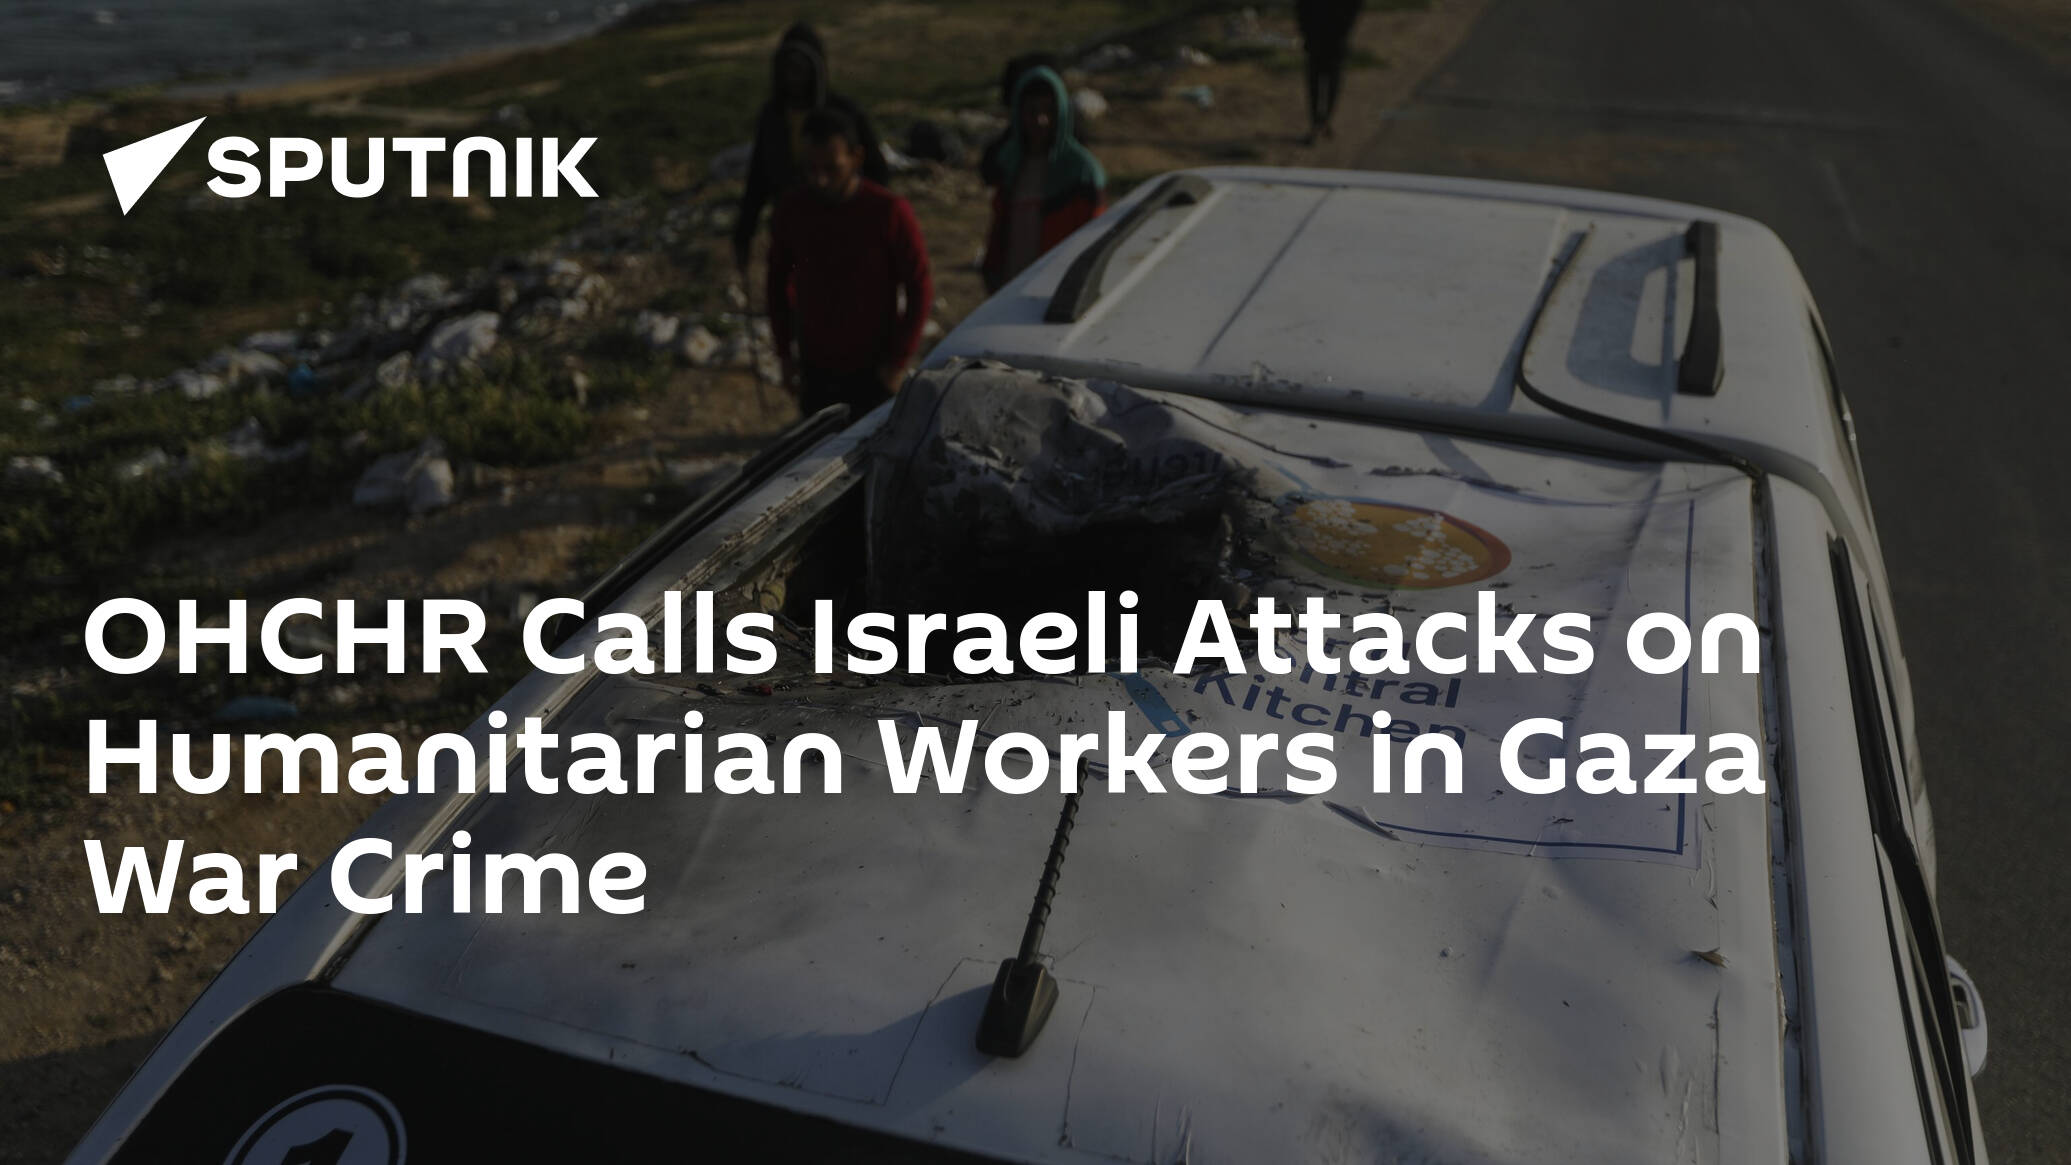 OHCHR Calls Israeli Attacks on Humanitarian Workers in Gaza War Crime